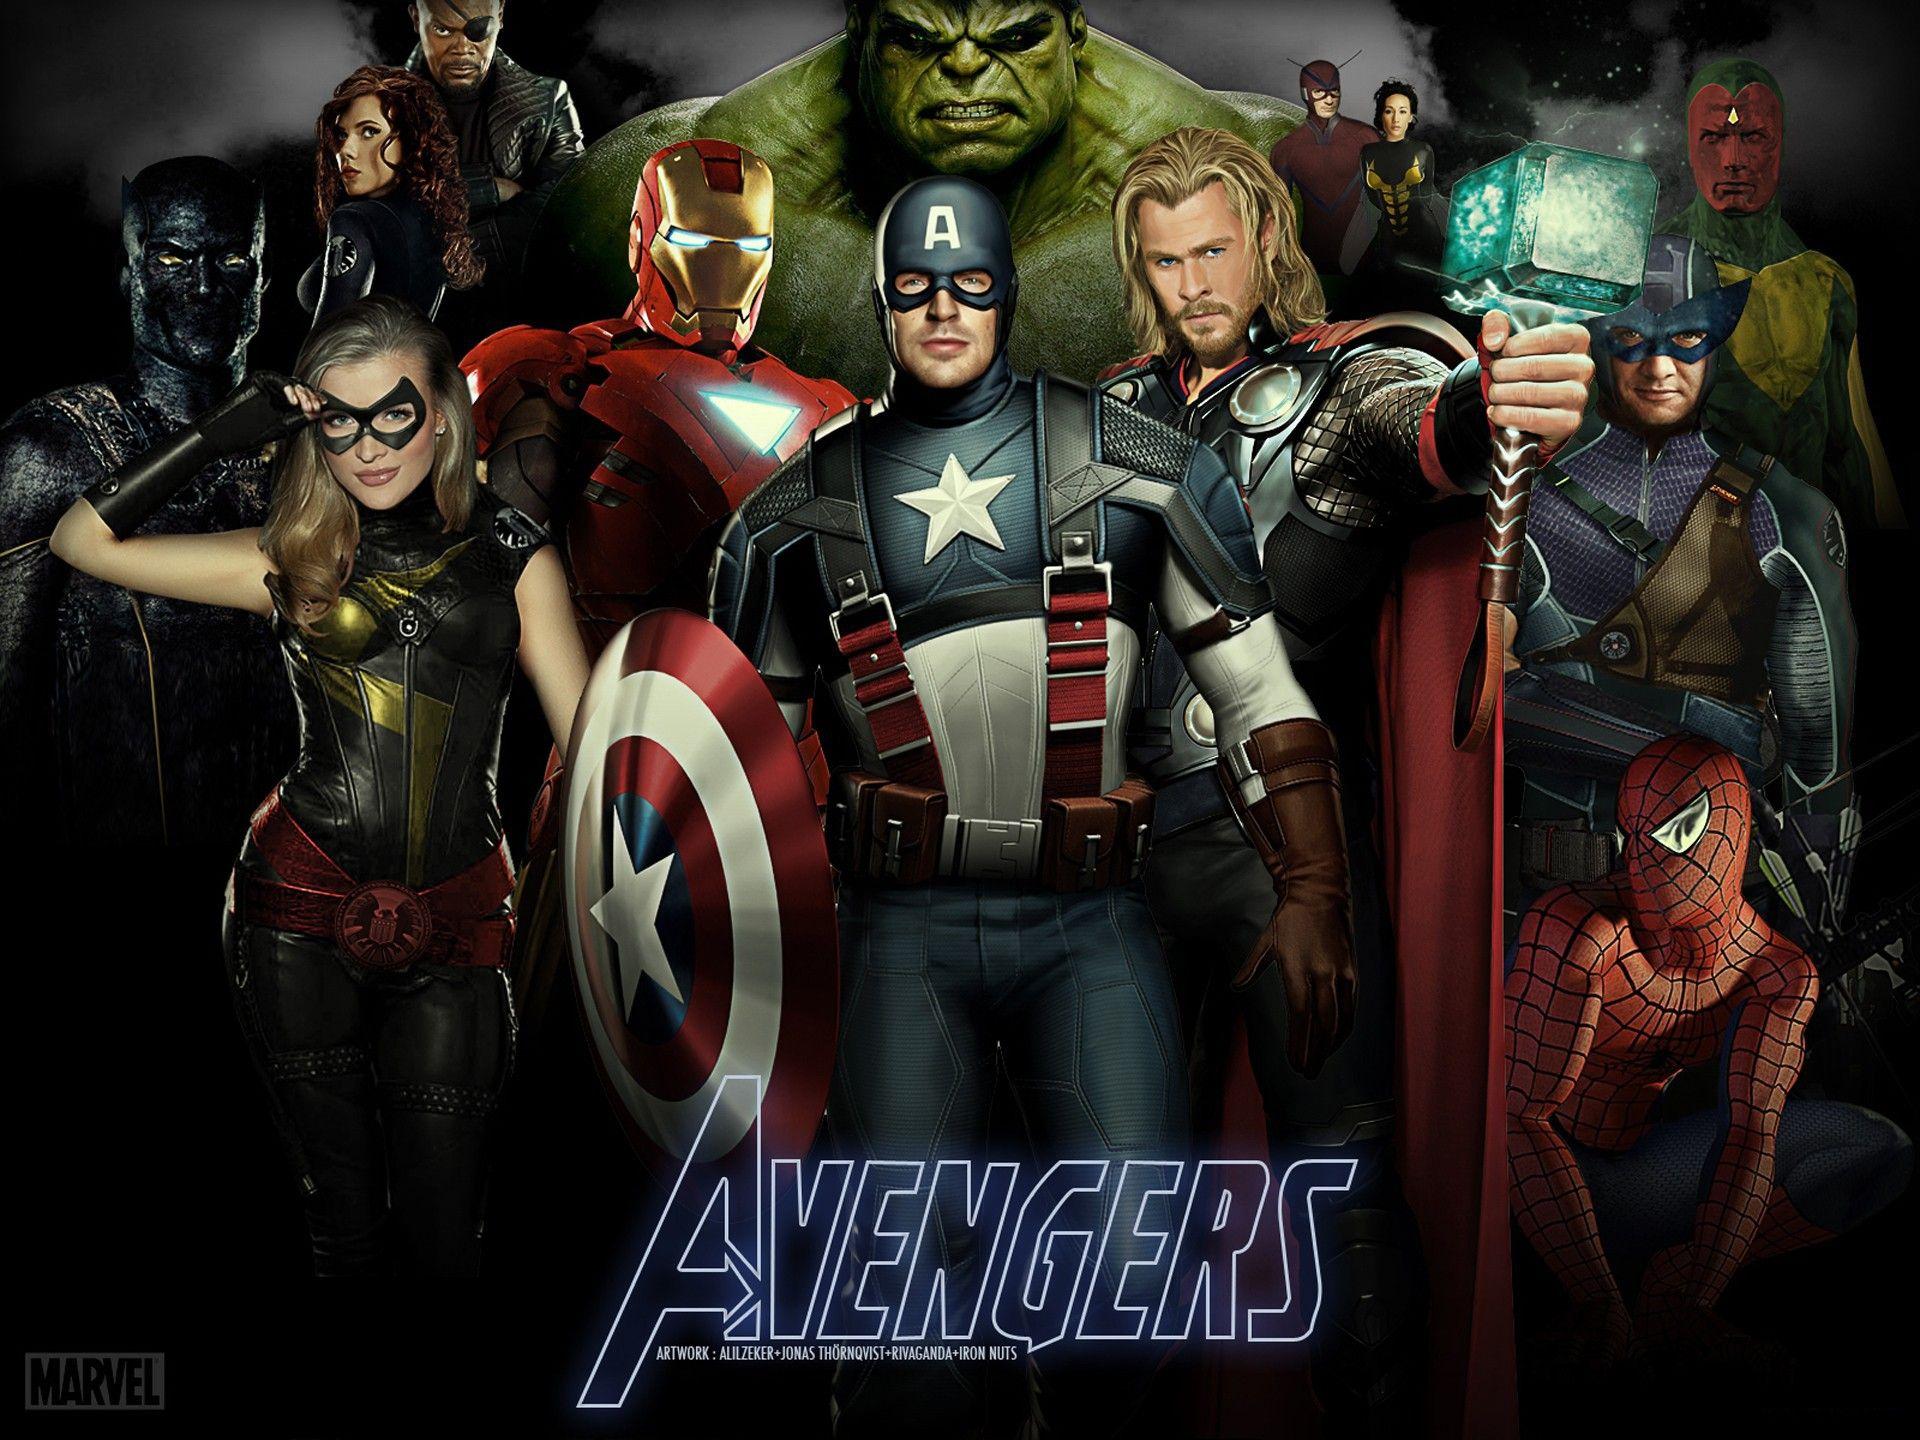 Avengers Assemble Wallpaper Hd, Image, Photos, Picture